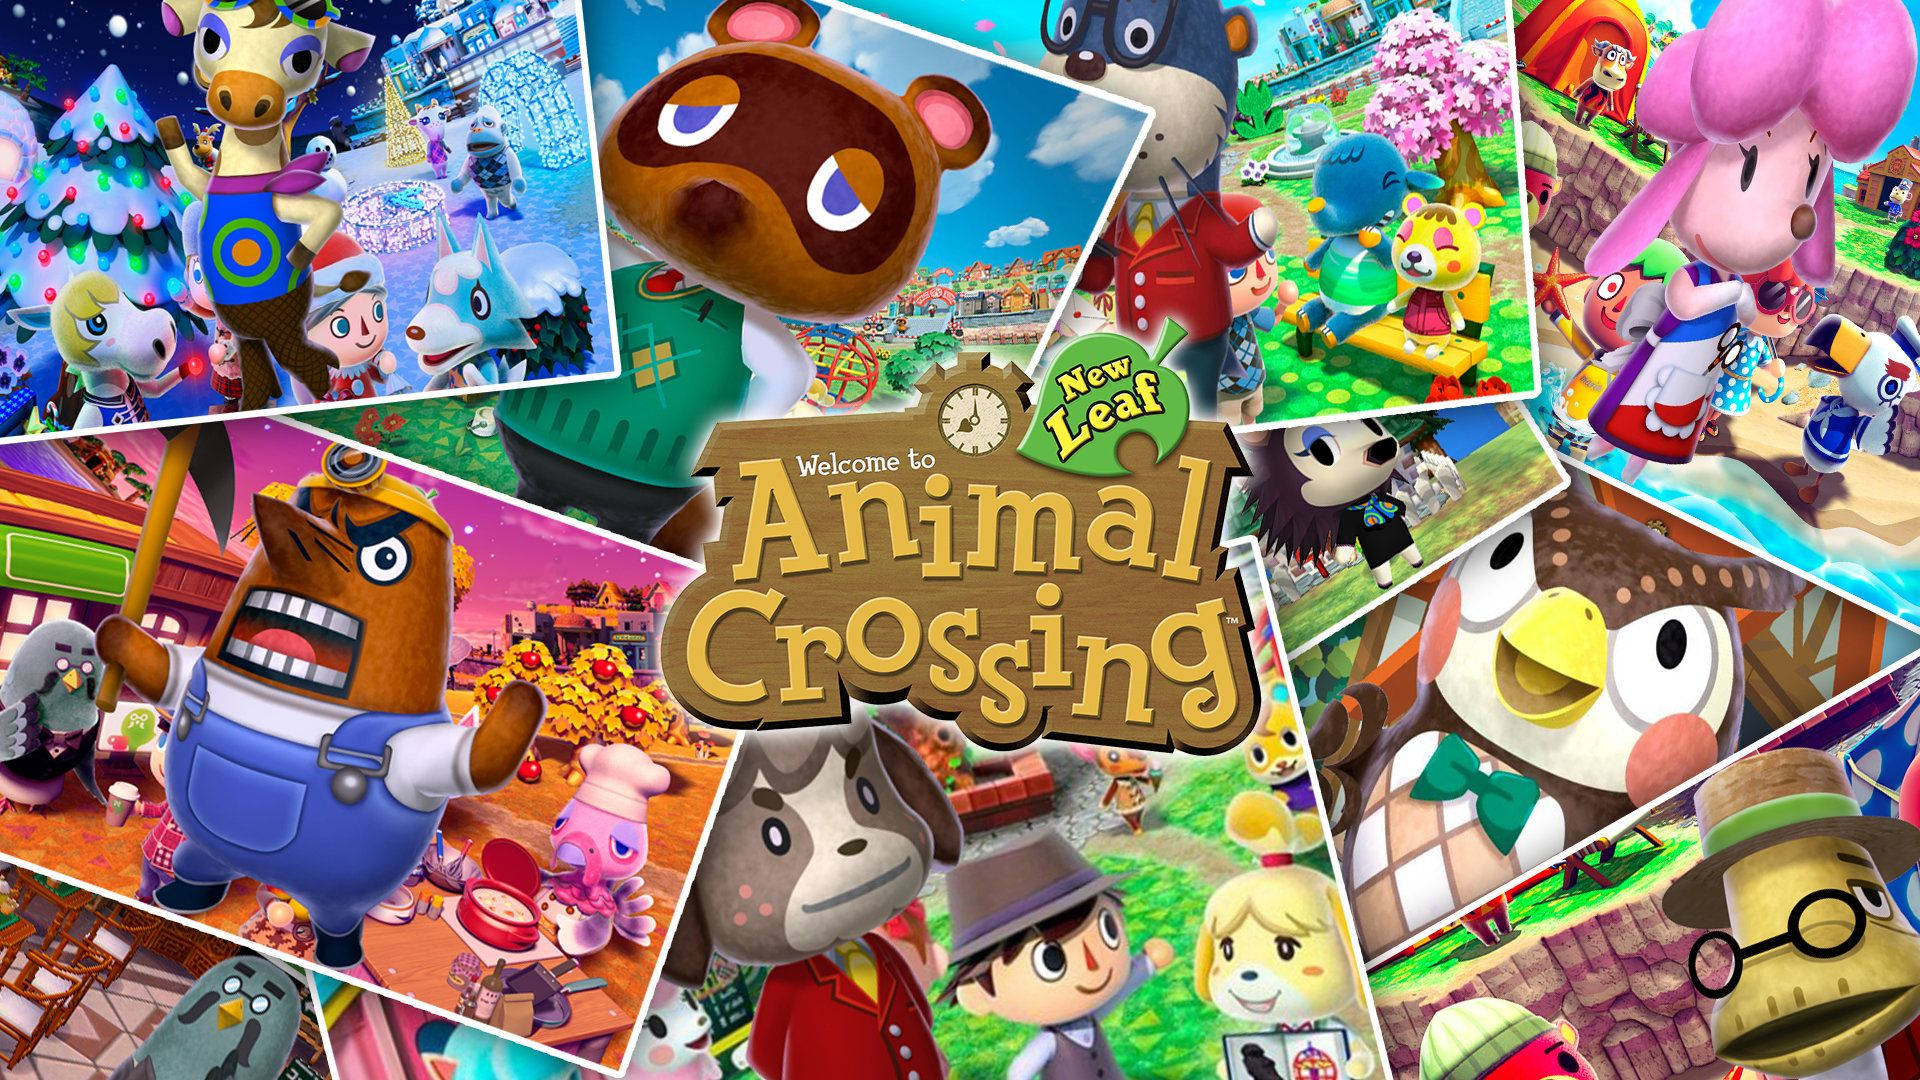 Cool Hd Animal Crossing Poster